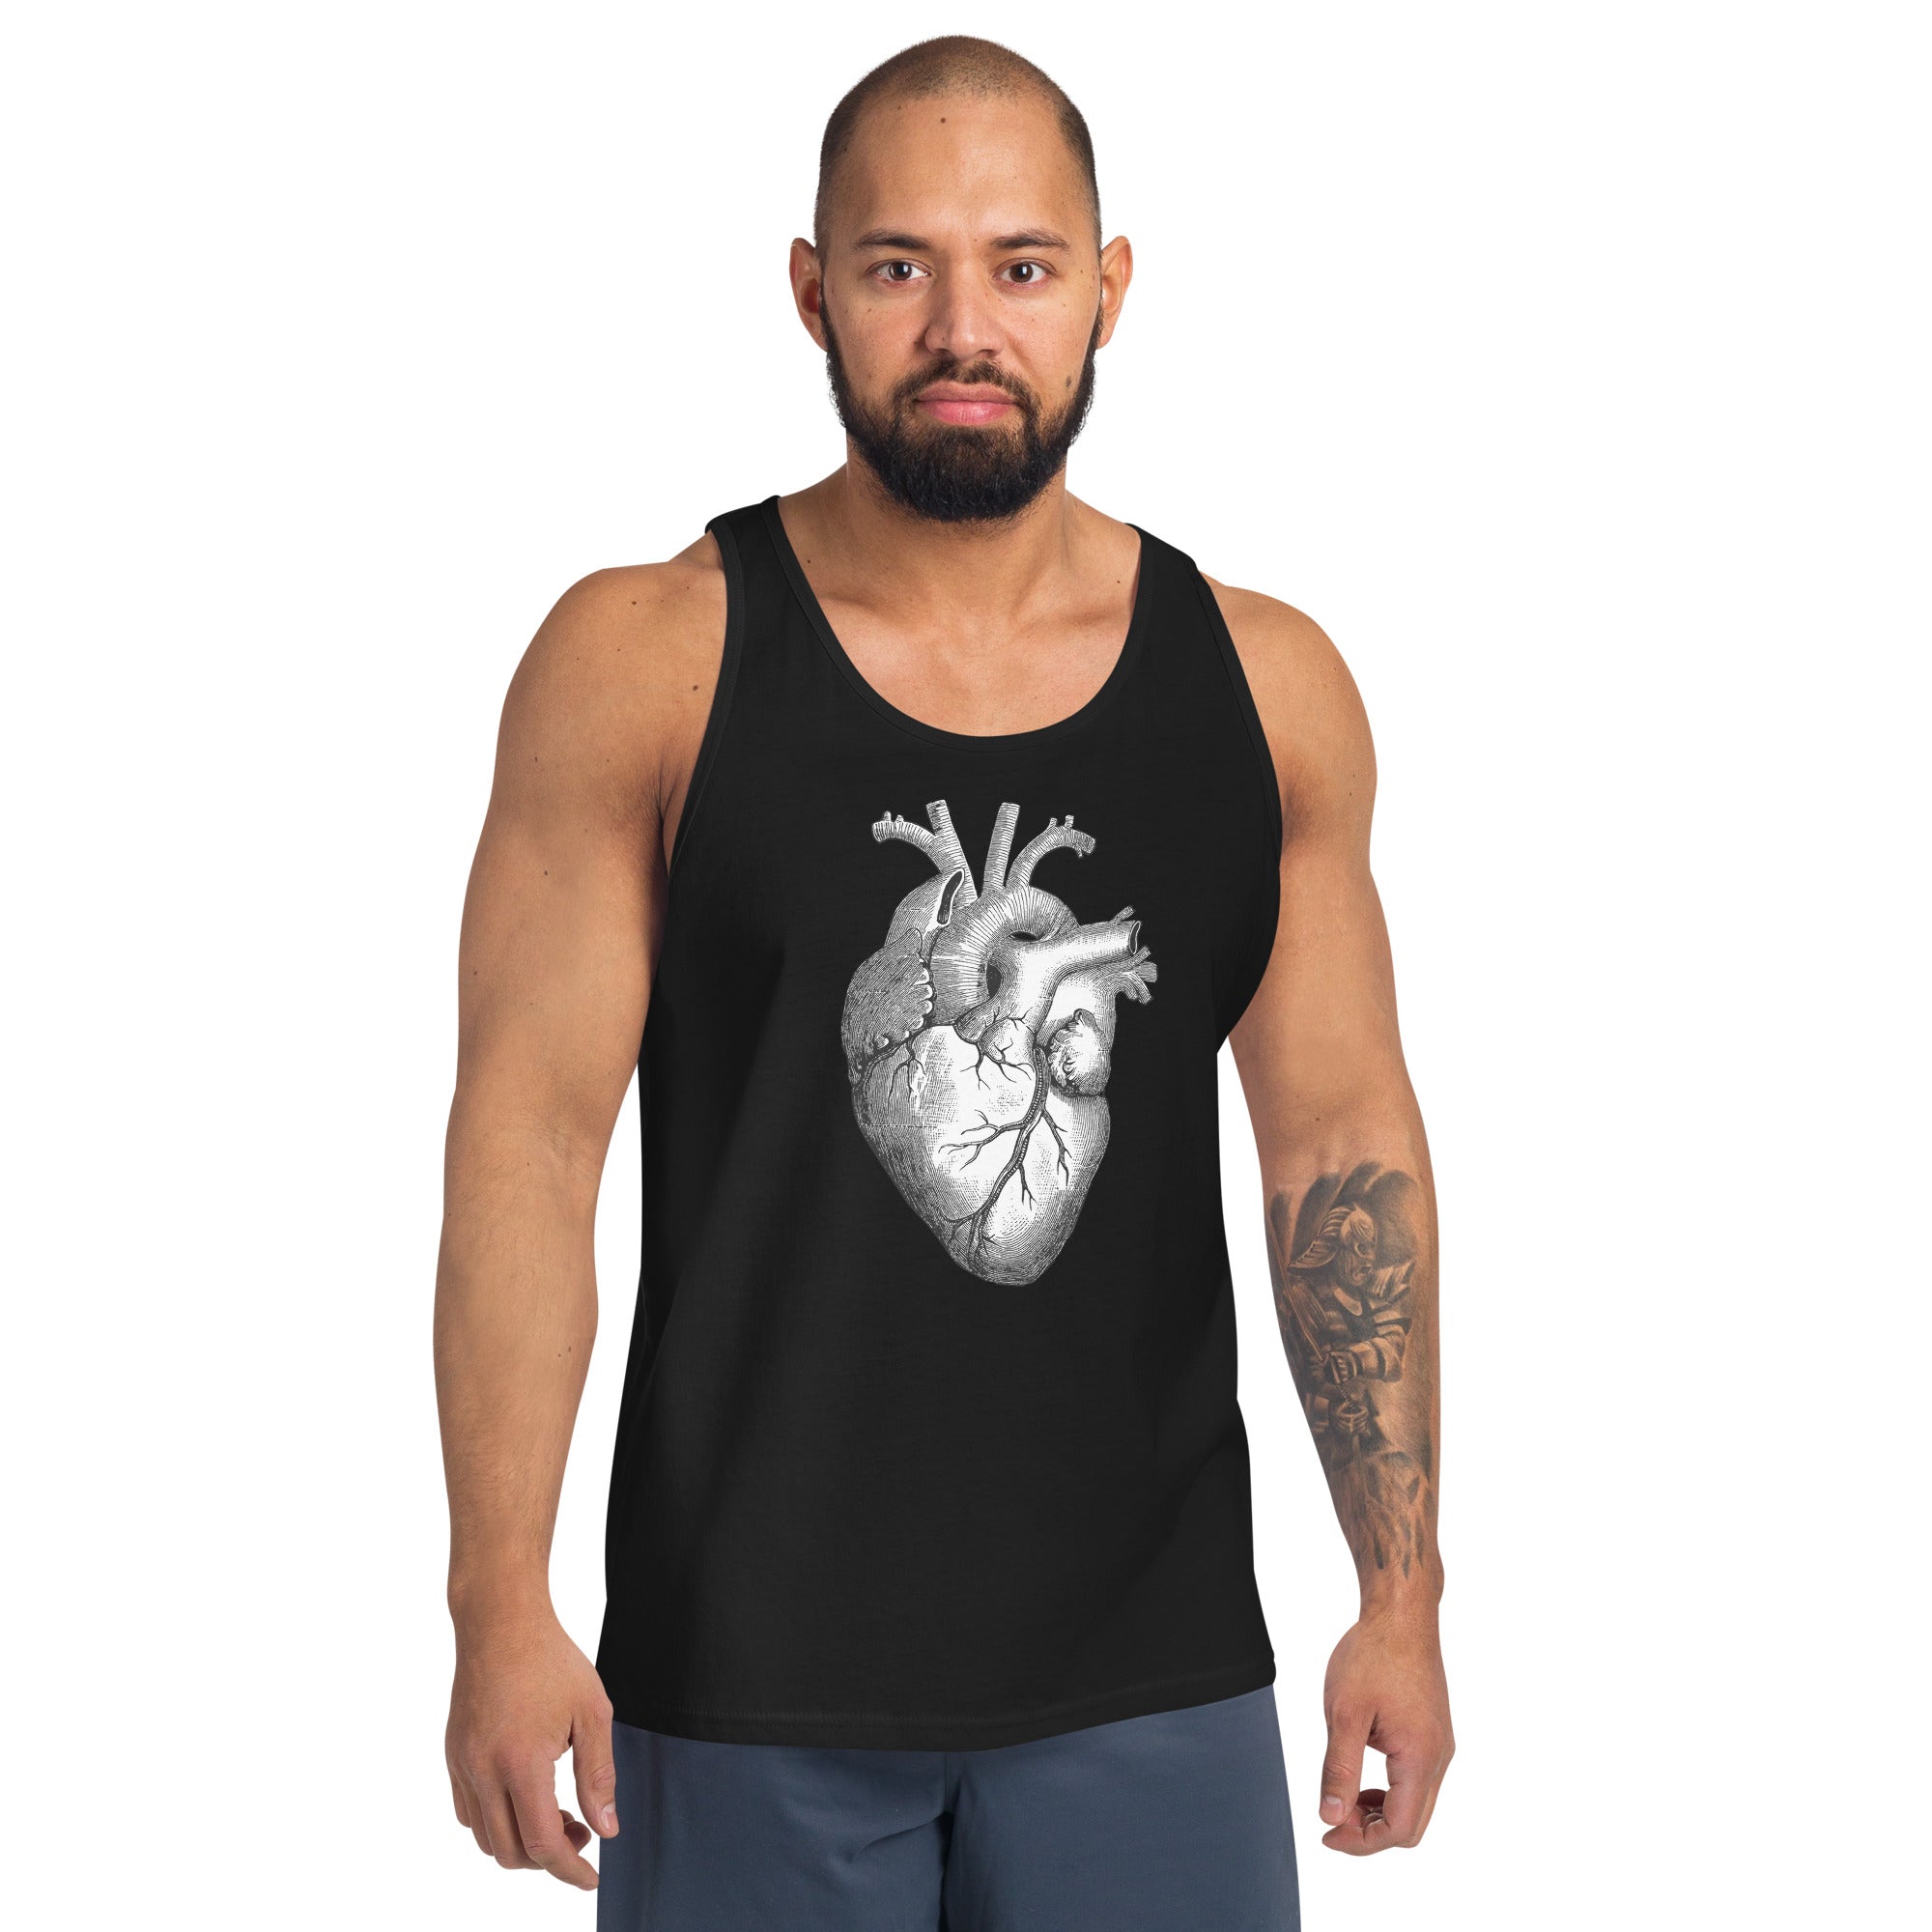 Anatomical Human Heart Medical Art Men's Tank Top Black and White - Edge of Life Designs